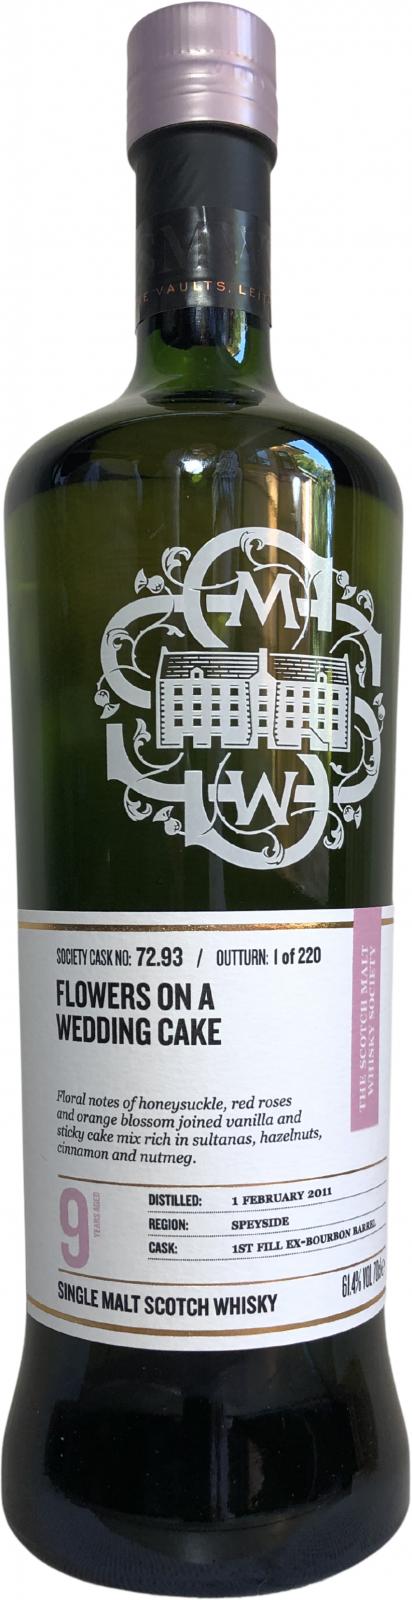 Miltonduff 2011 SMWS 72.93 Flowers on A wedding cake 1st Fill Ex-Bourbon Barrel 61.4% 700ml